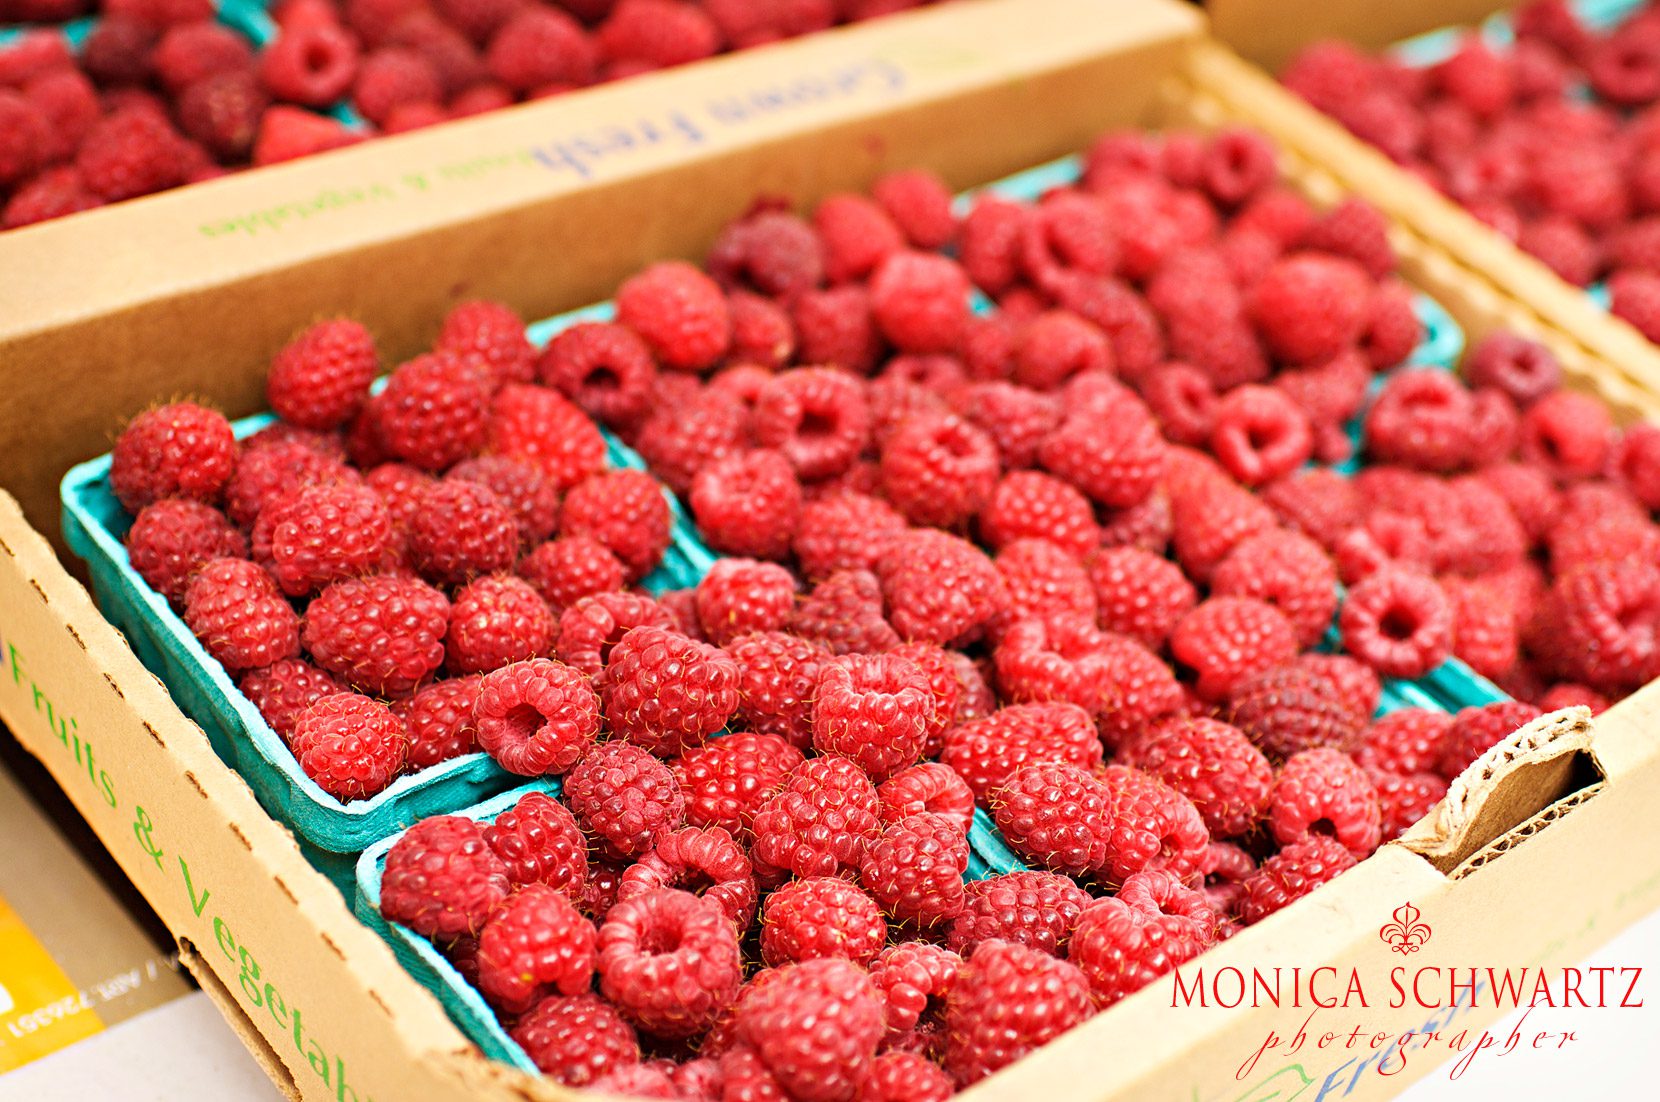 Organic-raspberries-at-the-farmers-market-in-Carmel-by-the-Sea-California